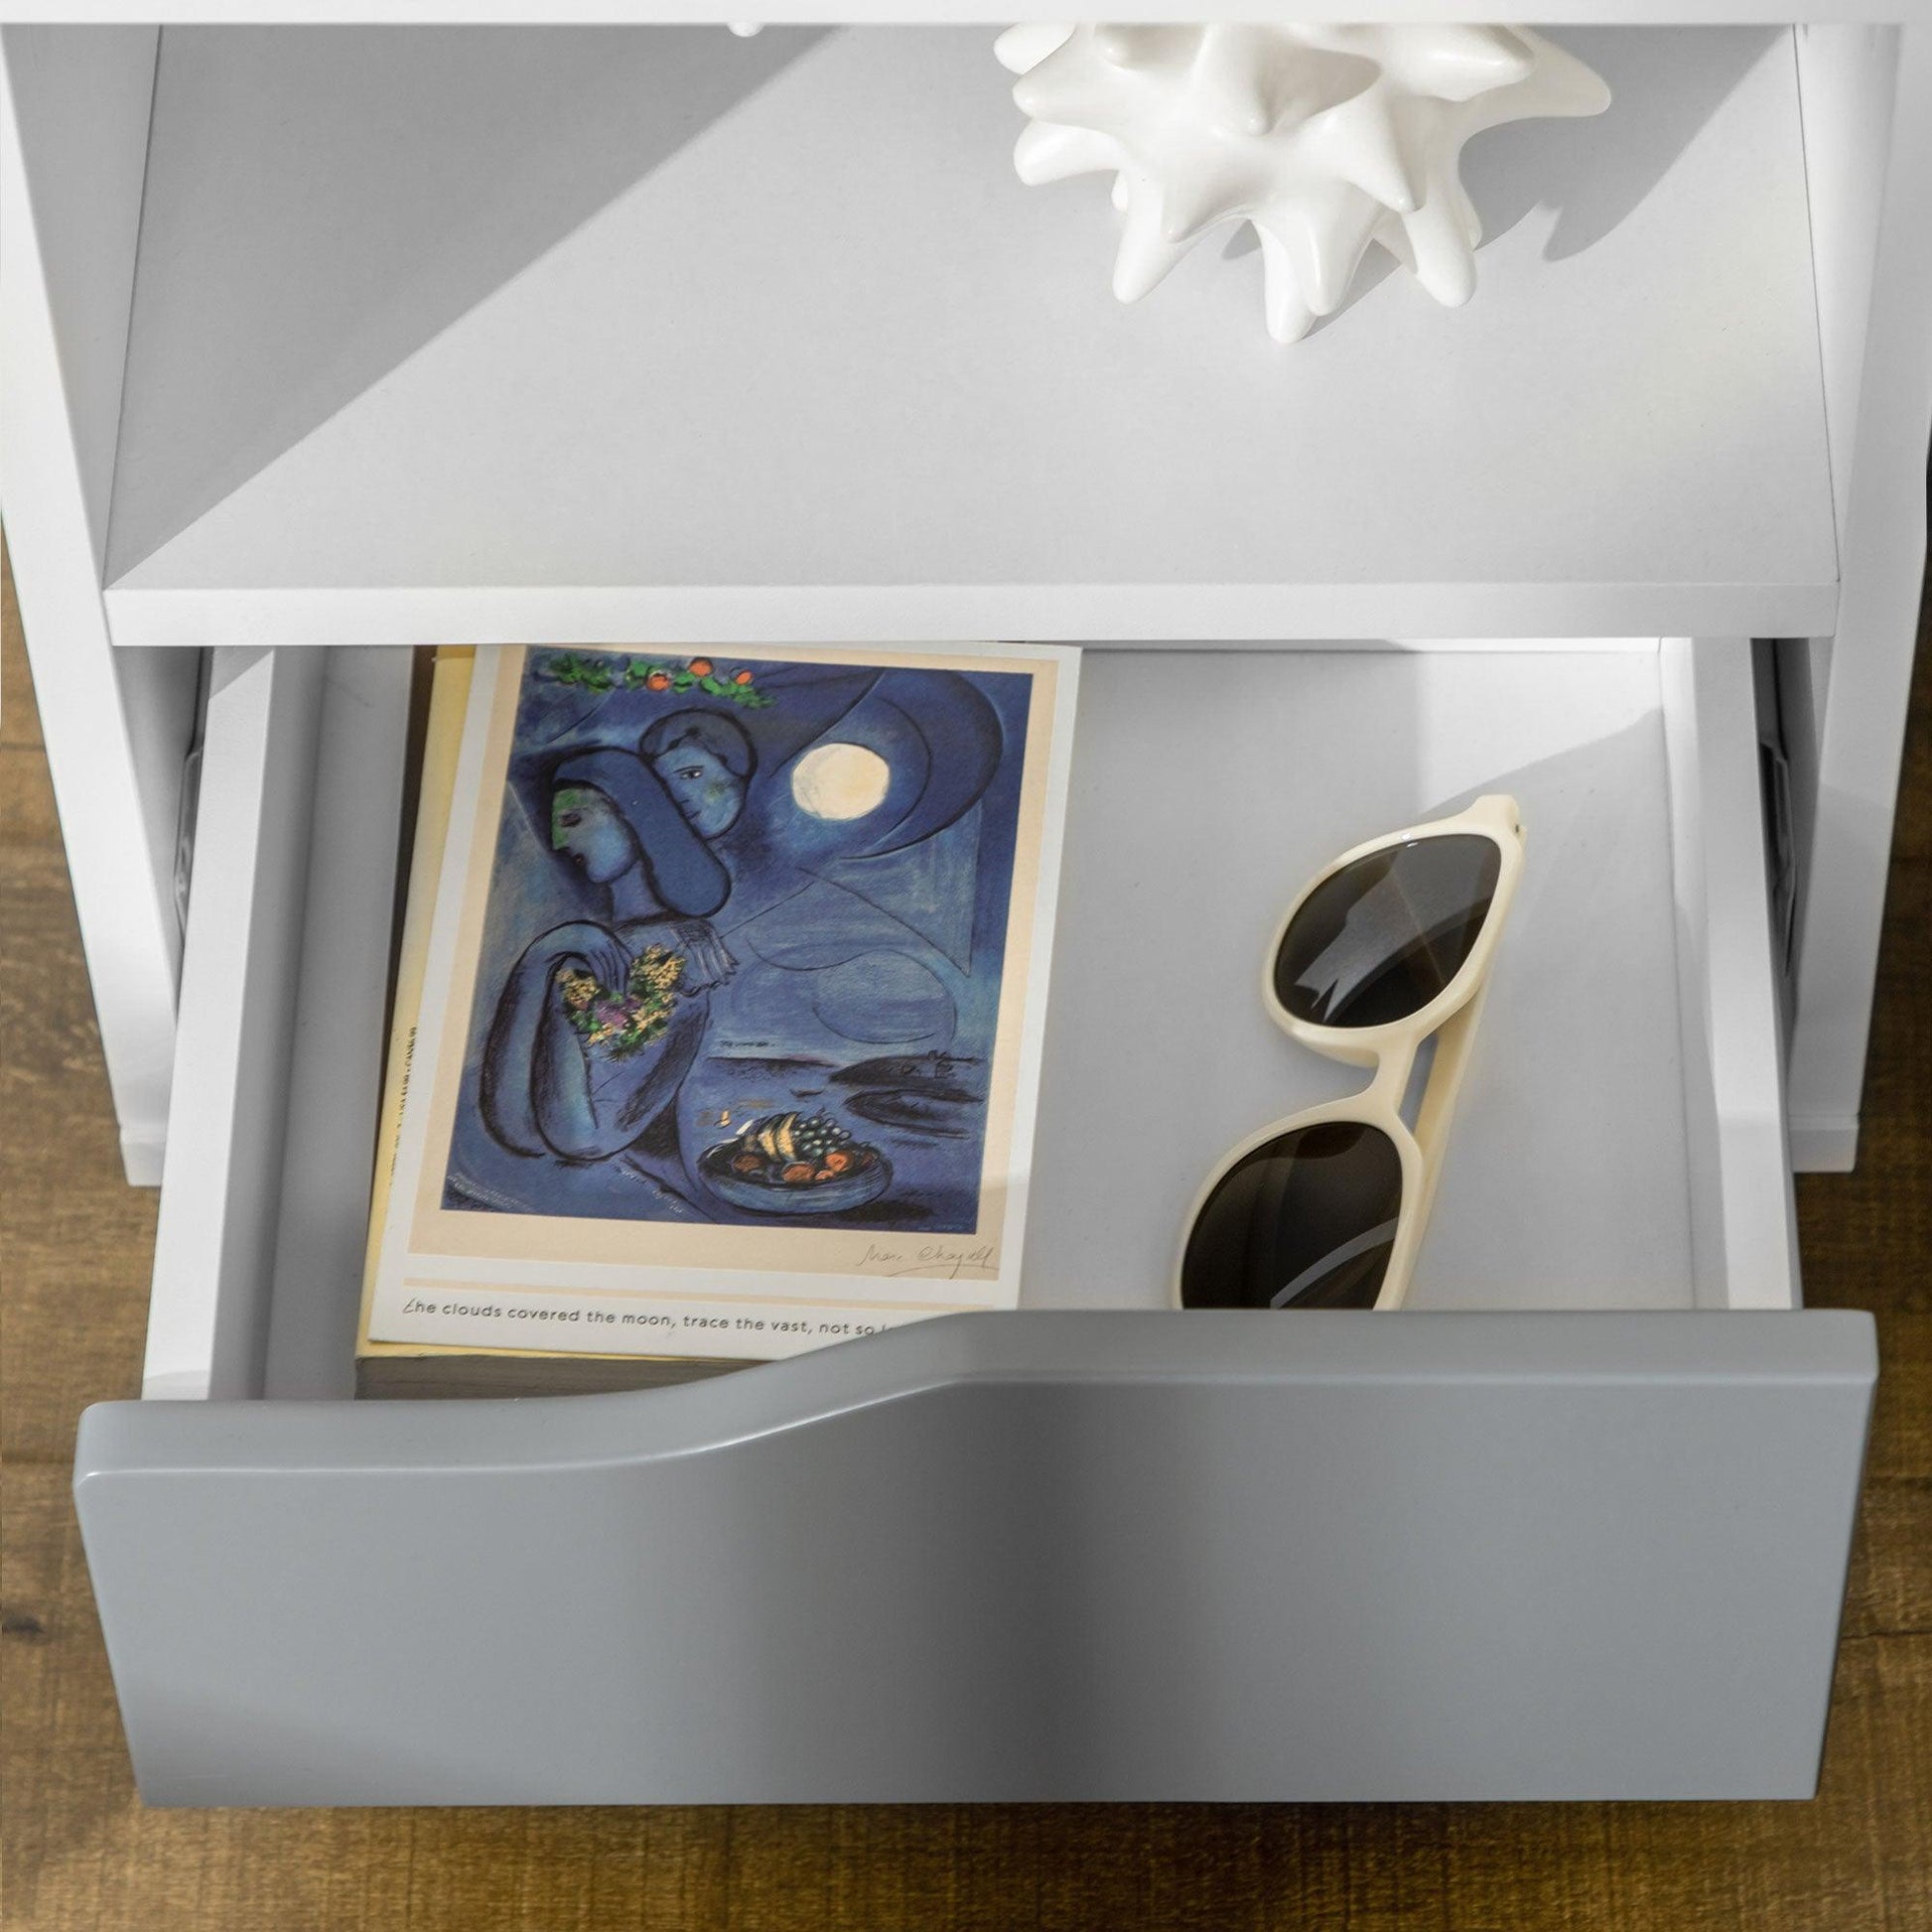 HOMCOM Modern Bedside Table, Drawer, Shelf, Wood Legs, White/Grey, 36.8x33x43.8cm - ALL4U RETAILER LTD